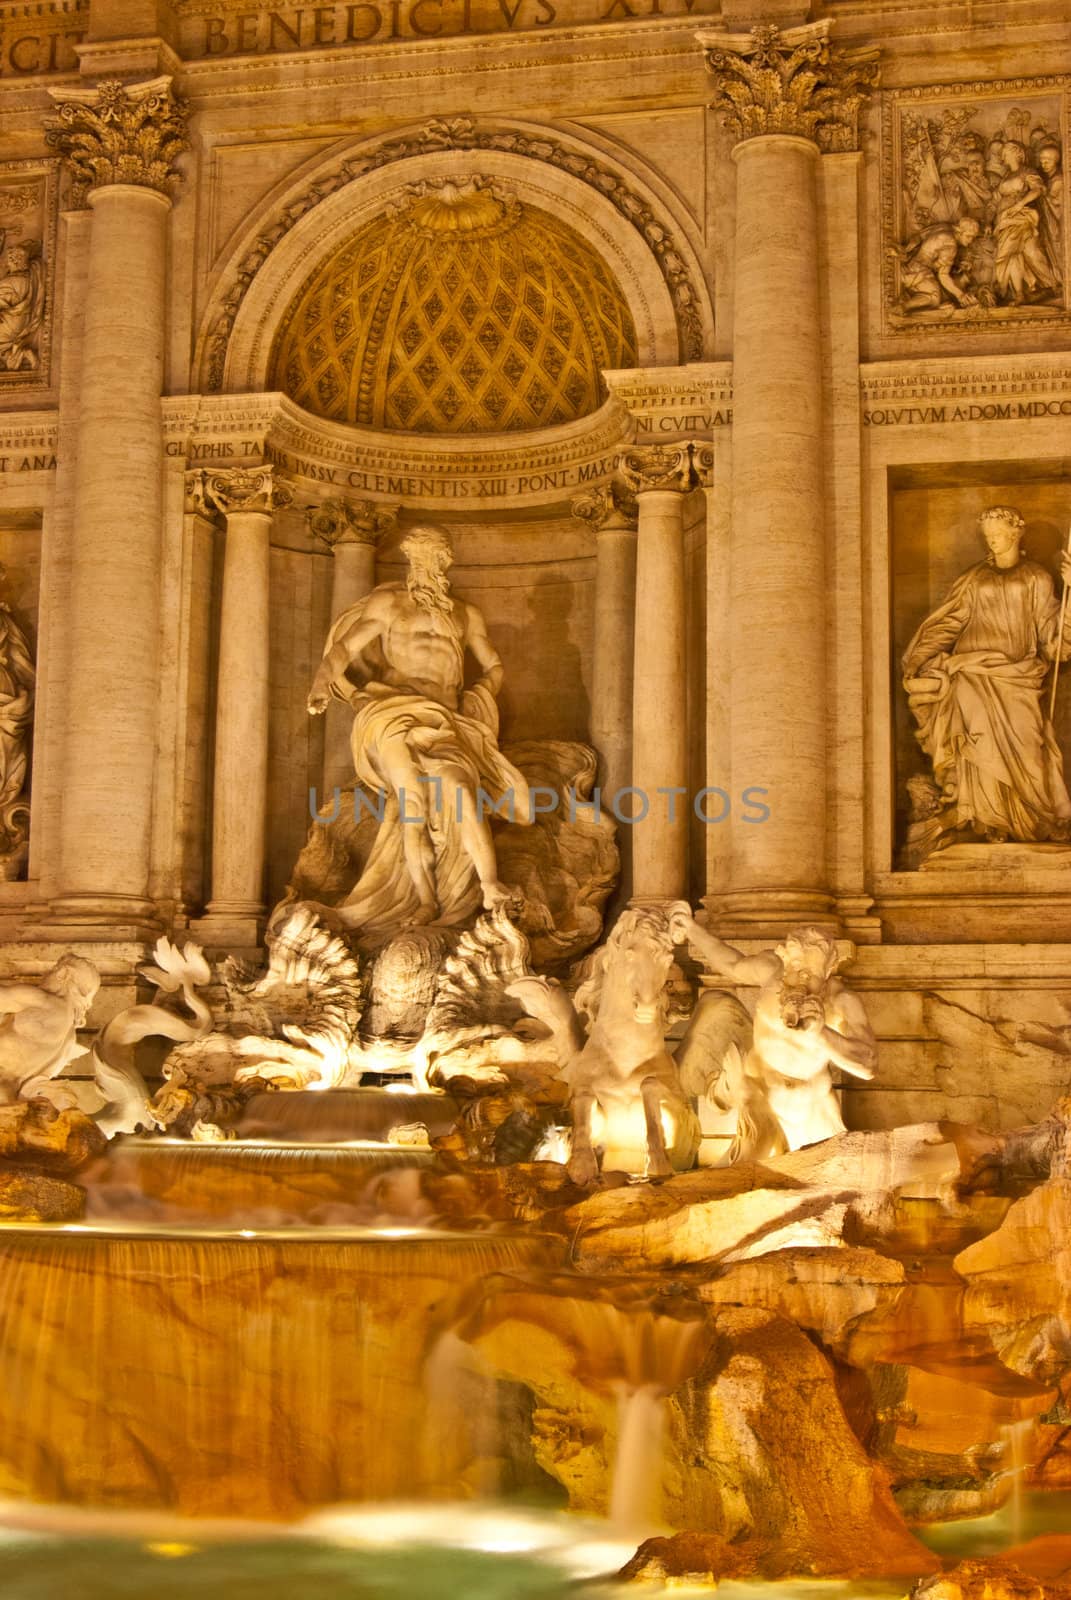 famous fountain Fontana di Trevi in Rome illuminated at night